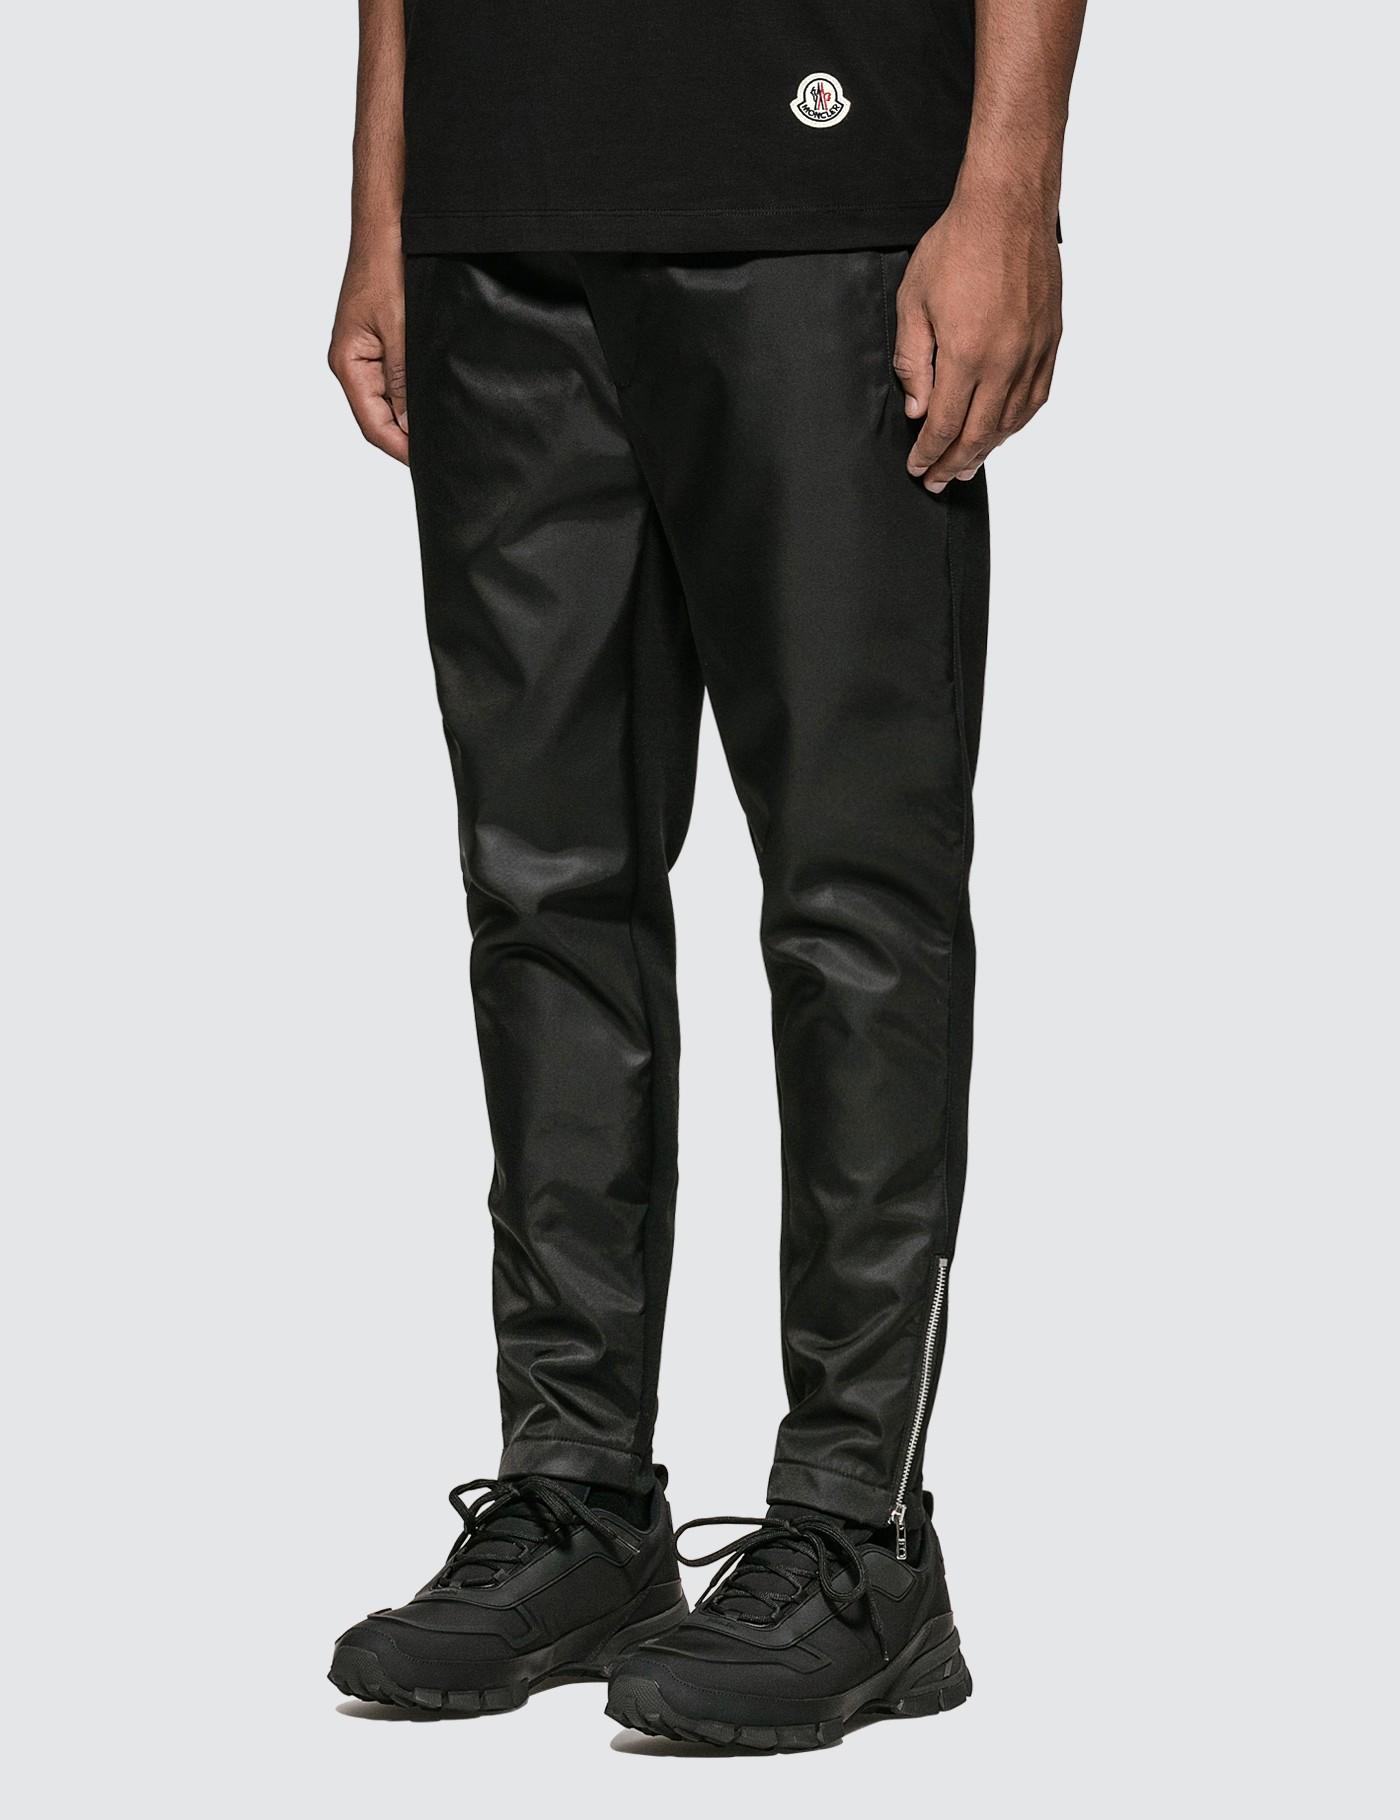 Prada Synthetic Nylon Cotton Sweatpants in Black for Men - Lyst